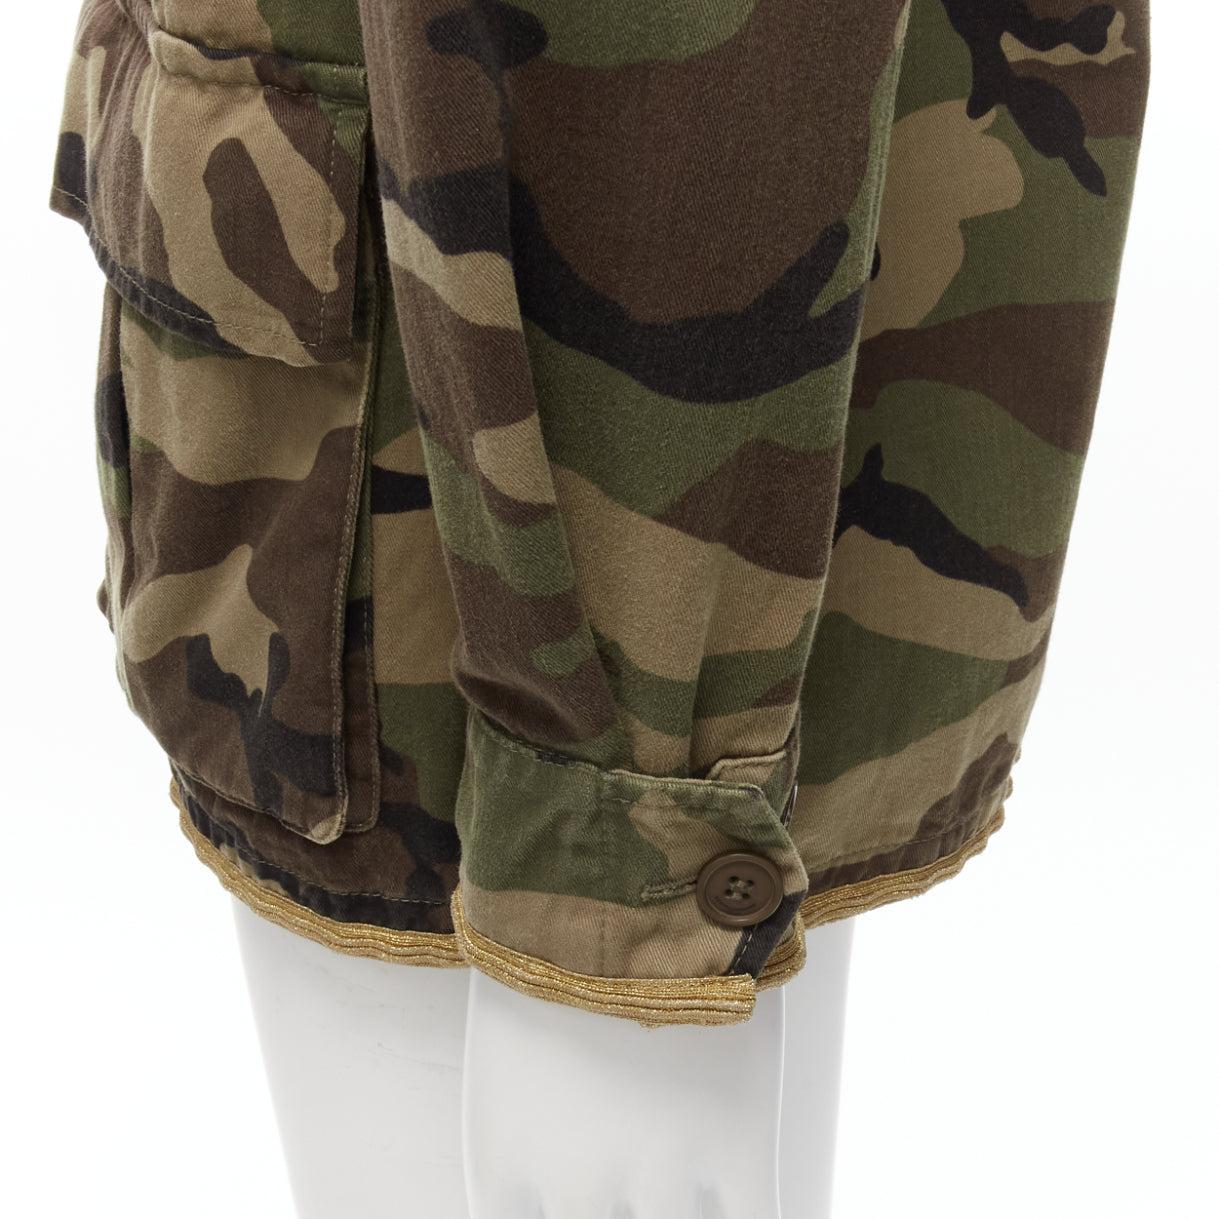 SAINT LAURENT Hedi Slimane 2014 trim camouflage military cargo jacket FR46 S For Sale 4